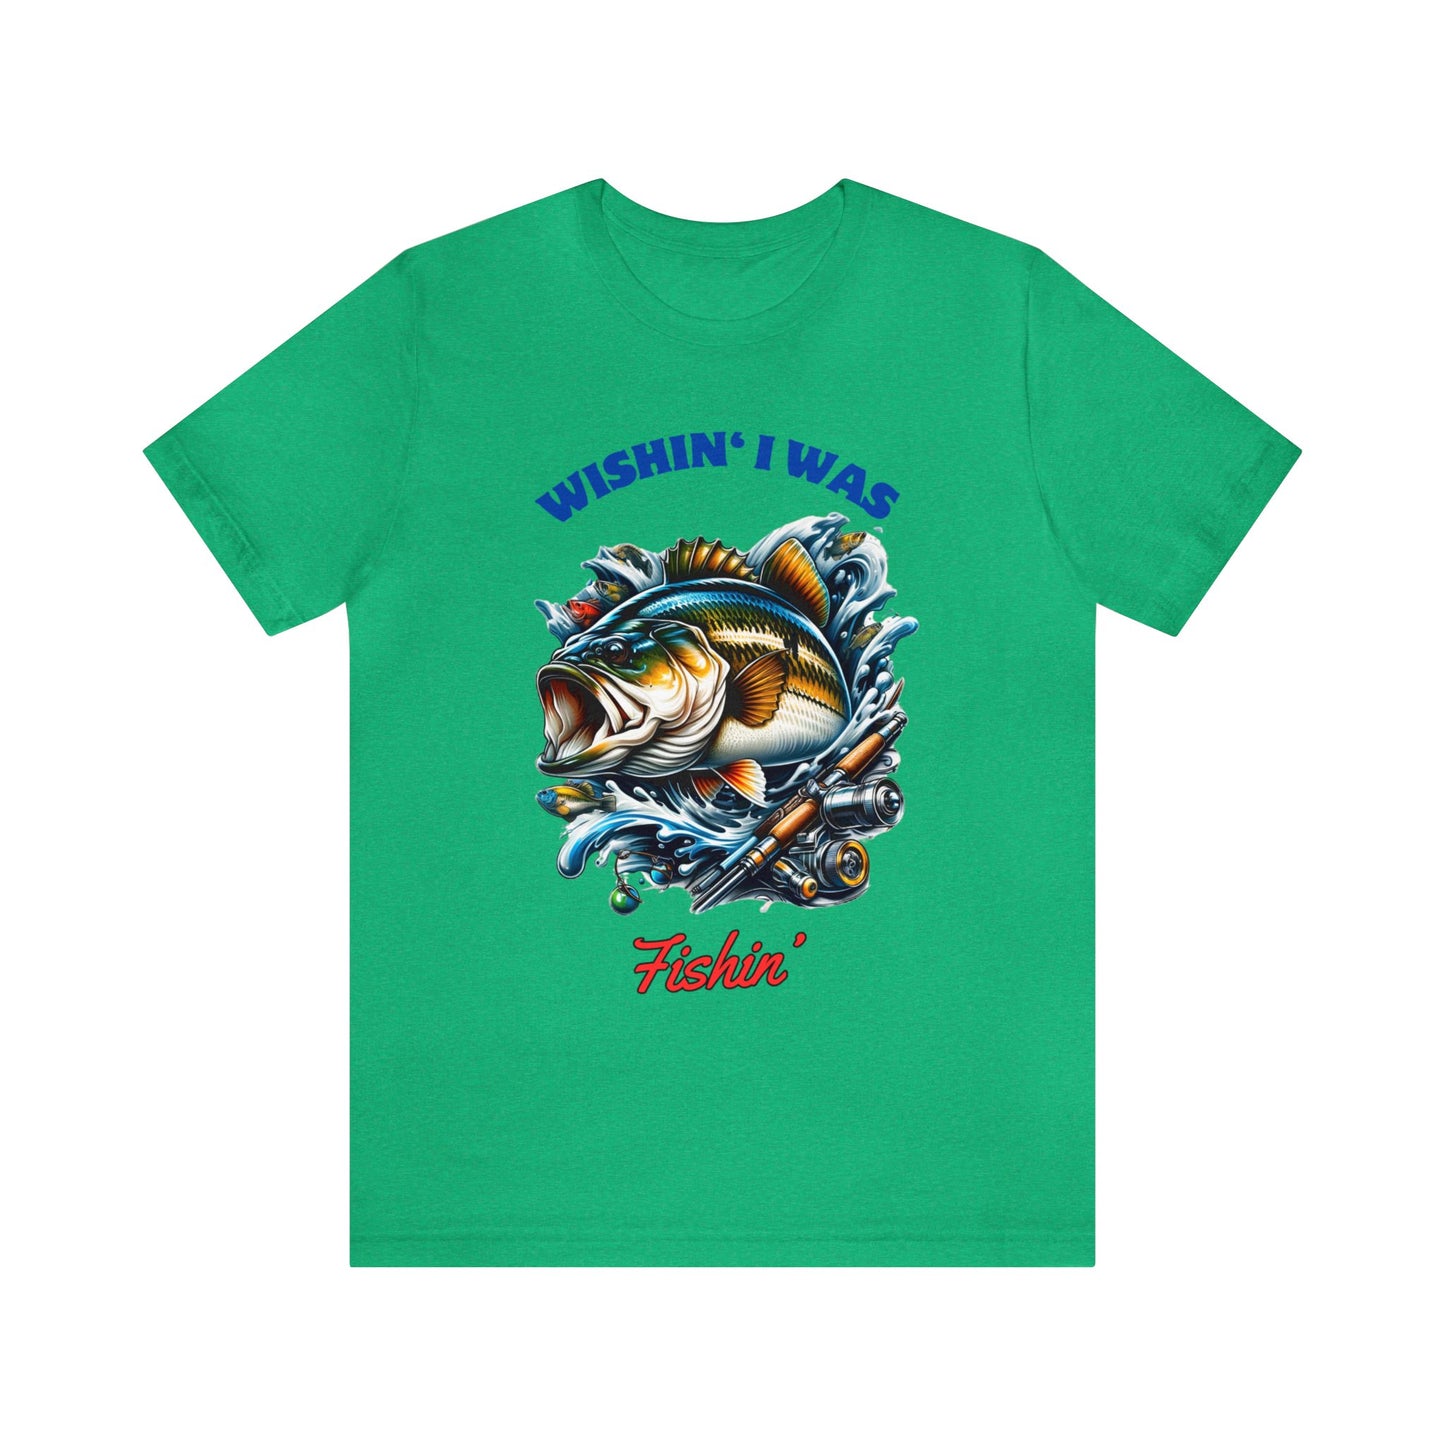 "Premium 'Wishin' I Was Fishin'' Graphic Tee - Angler's Choice Cotton T-Shirt"